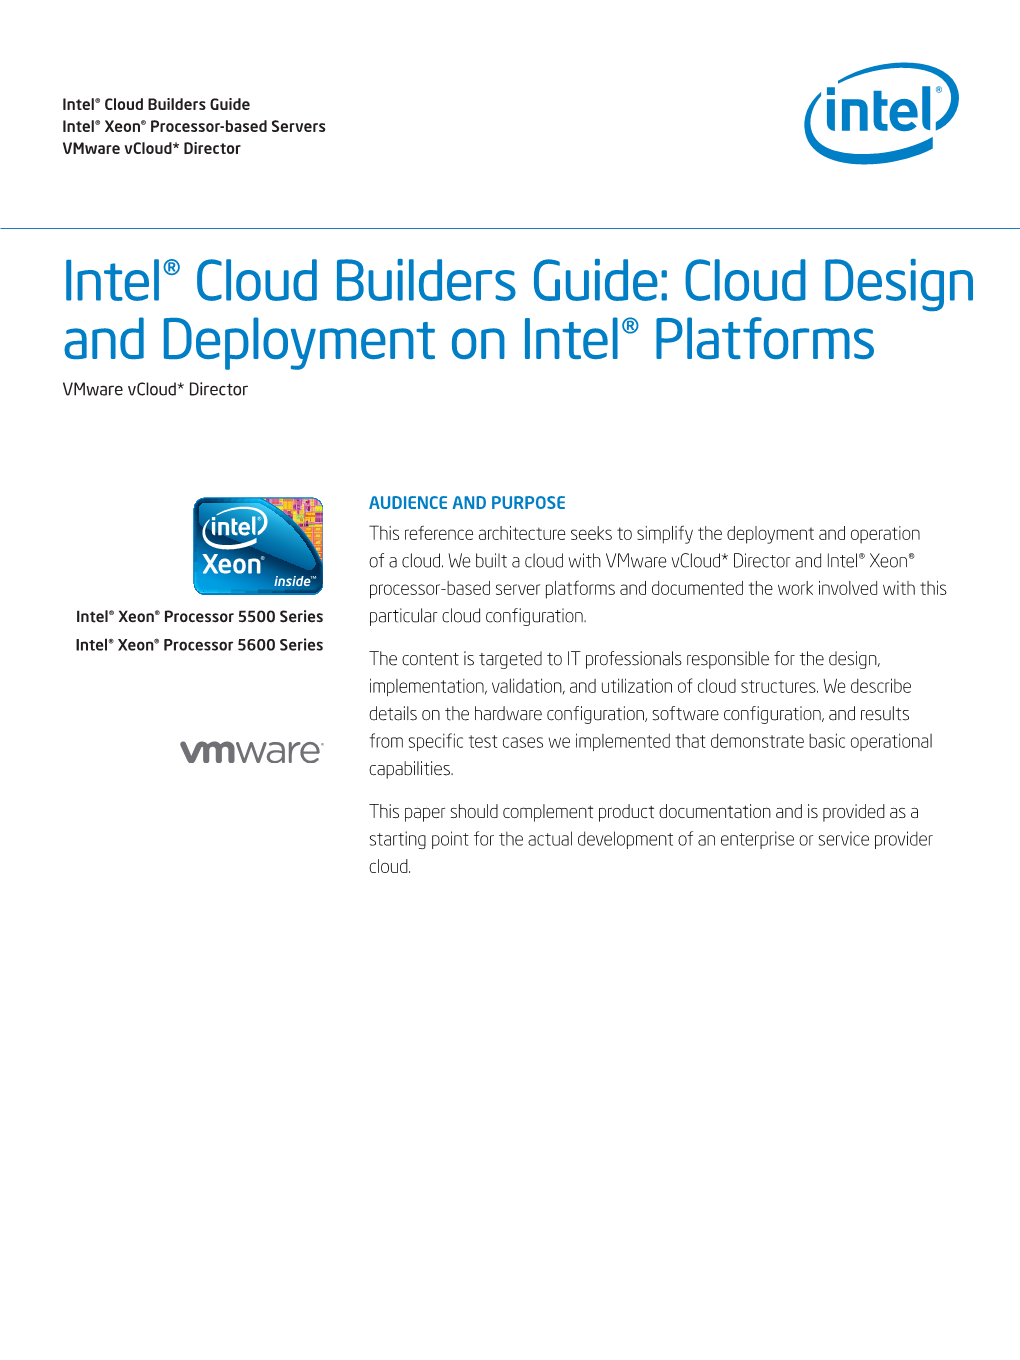 Intel® Cloud Builders Guide: Cloud Design and Deployment on Intel® Platforms Vmware Vcloud* Director